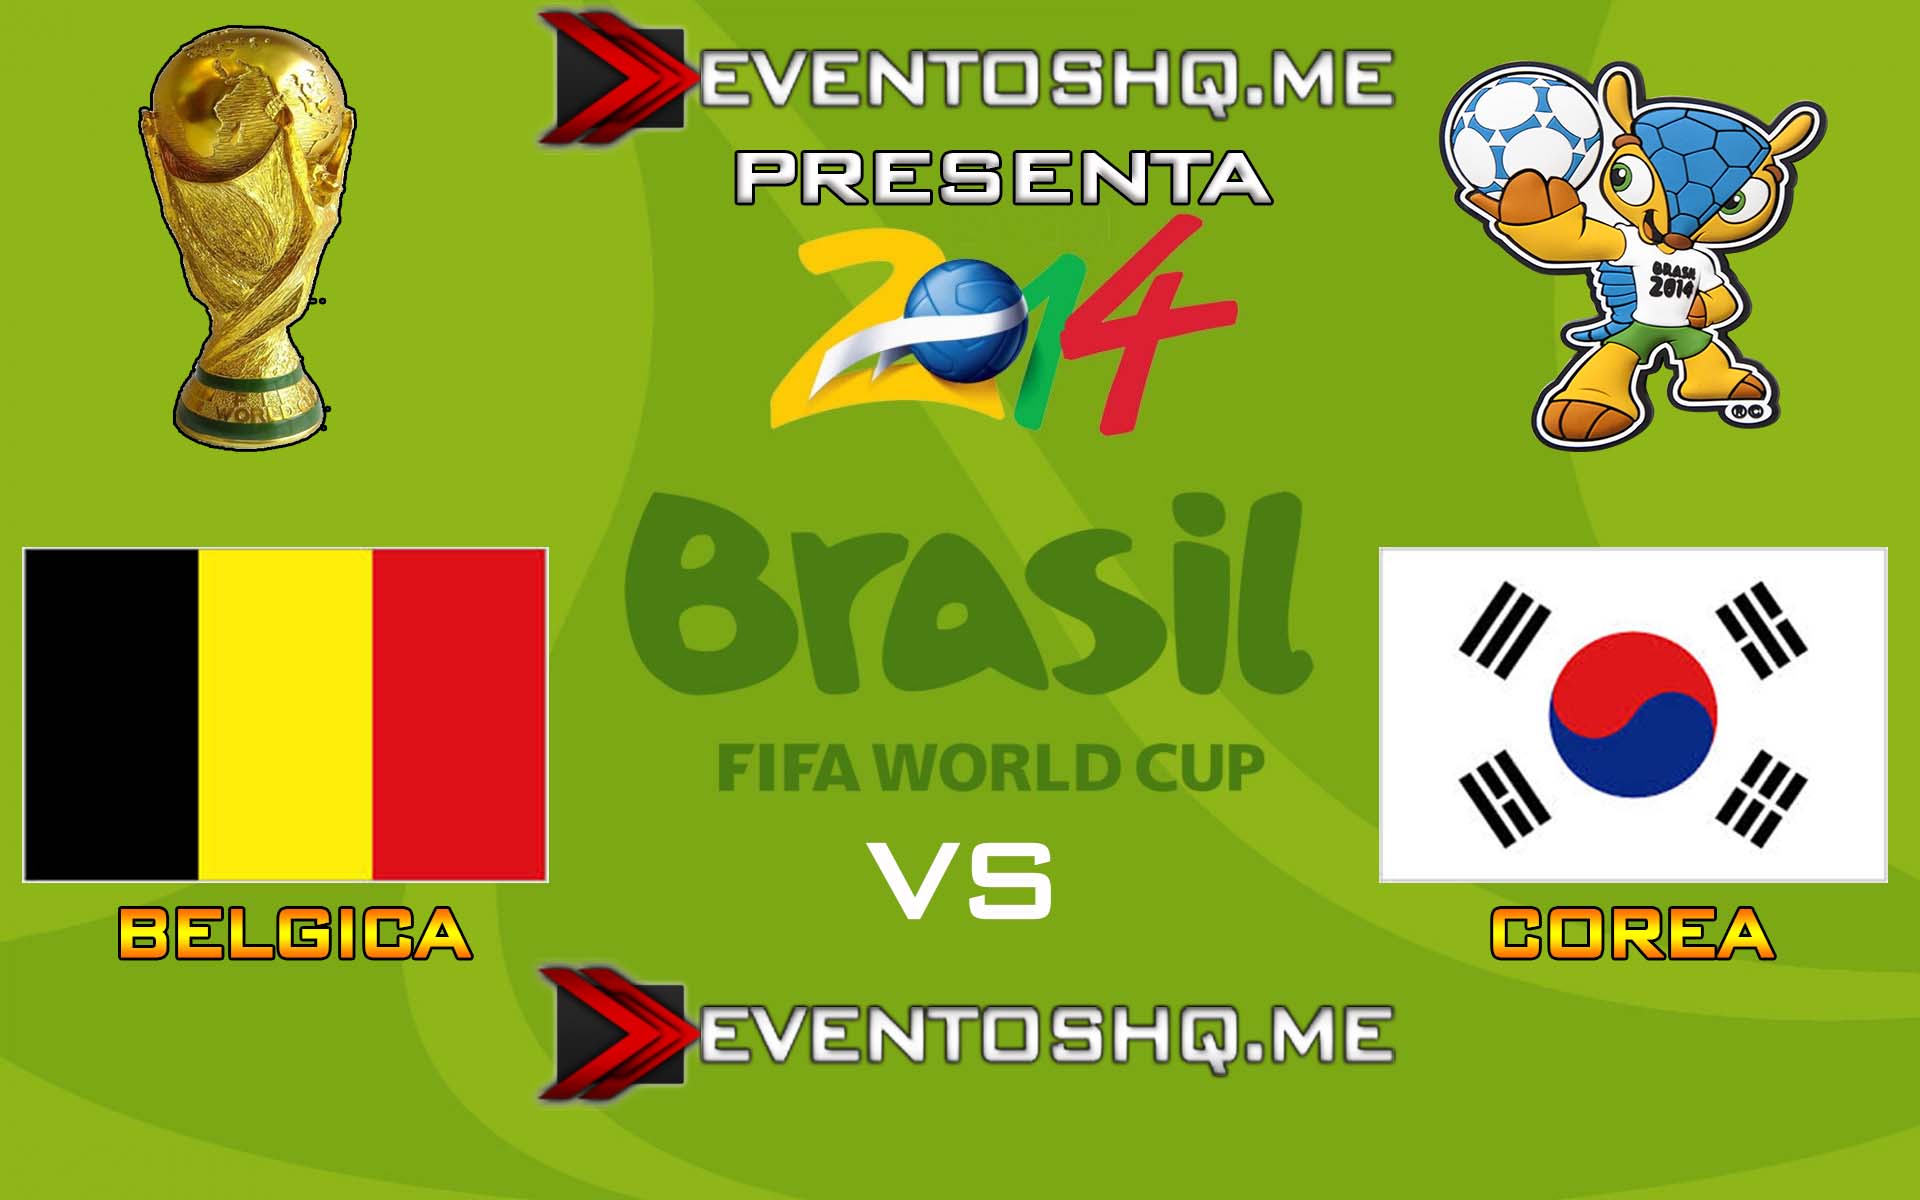 Ver en Vivo Belgica vs Corea del sur Mundial Brasil 2014 www.eventoshq.me